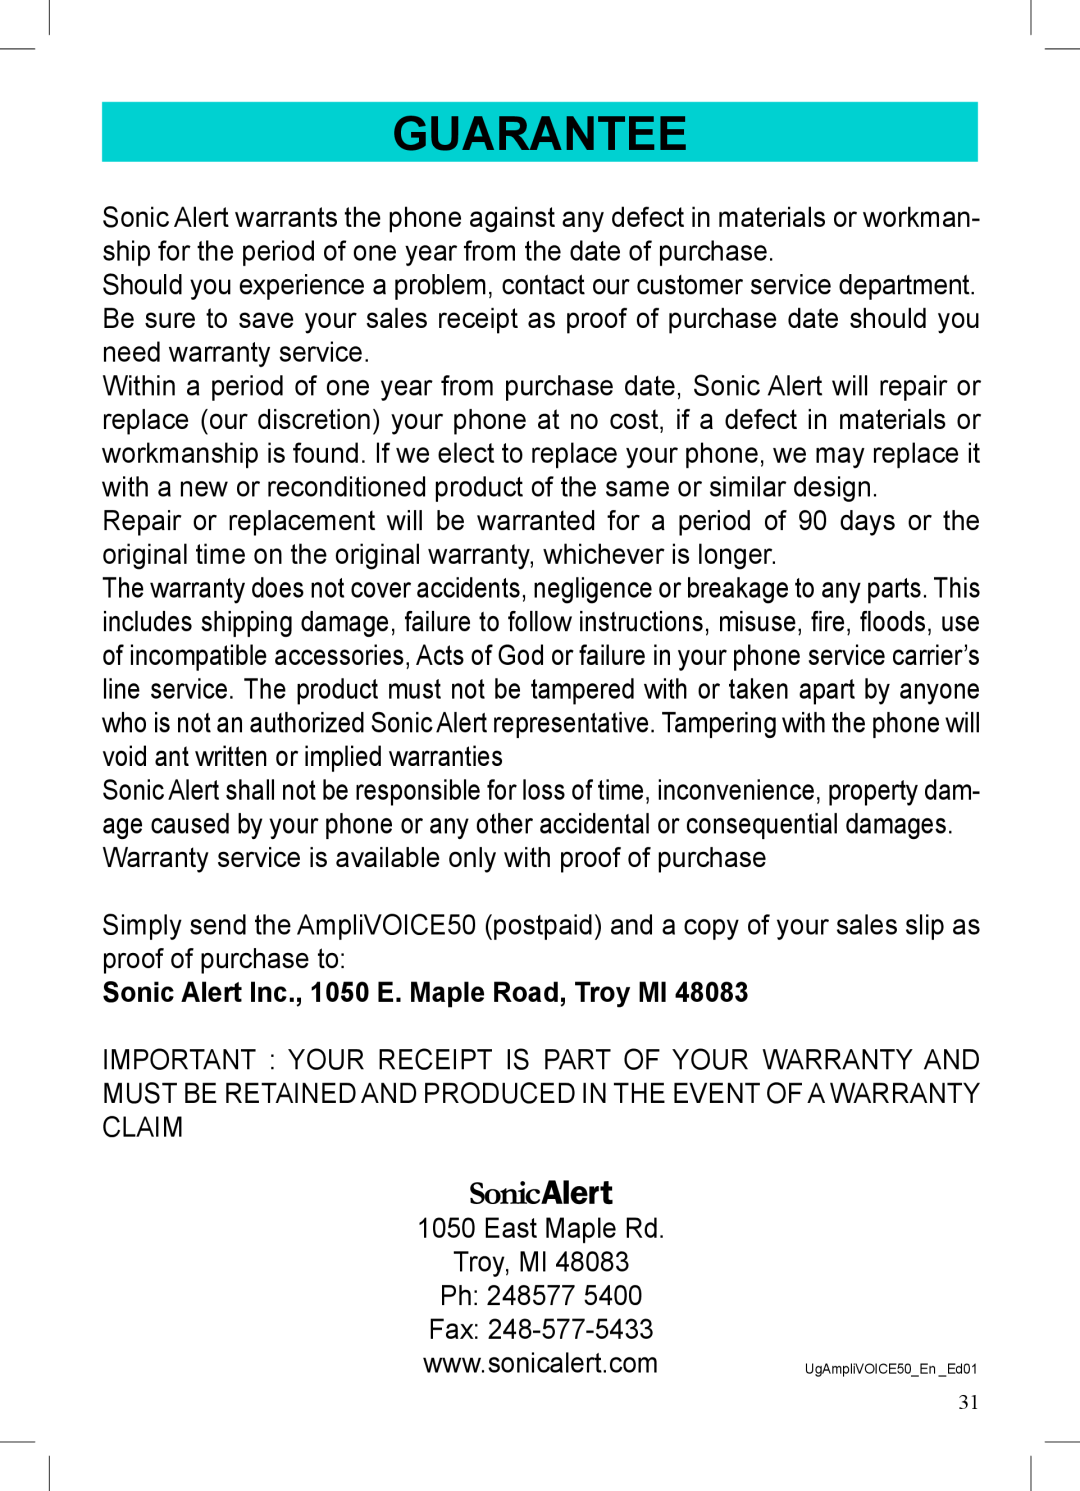 Geemarc AMPLIVOICE50 manual Guarantee, Sonic Alert Inc., 1050 E. Maple Road, Troy MI 